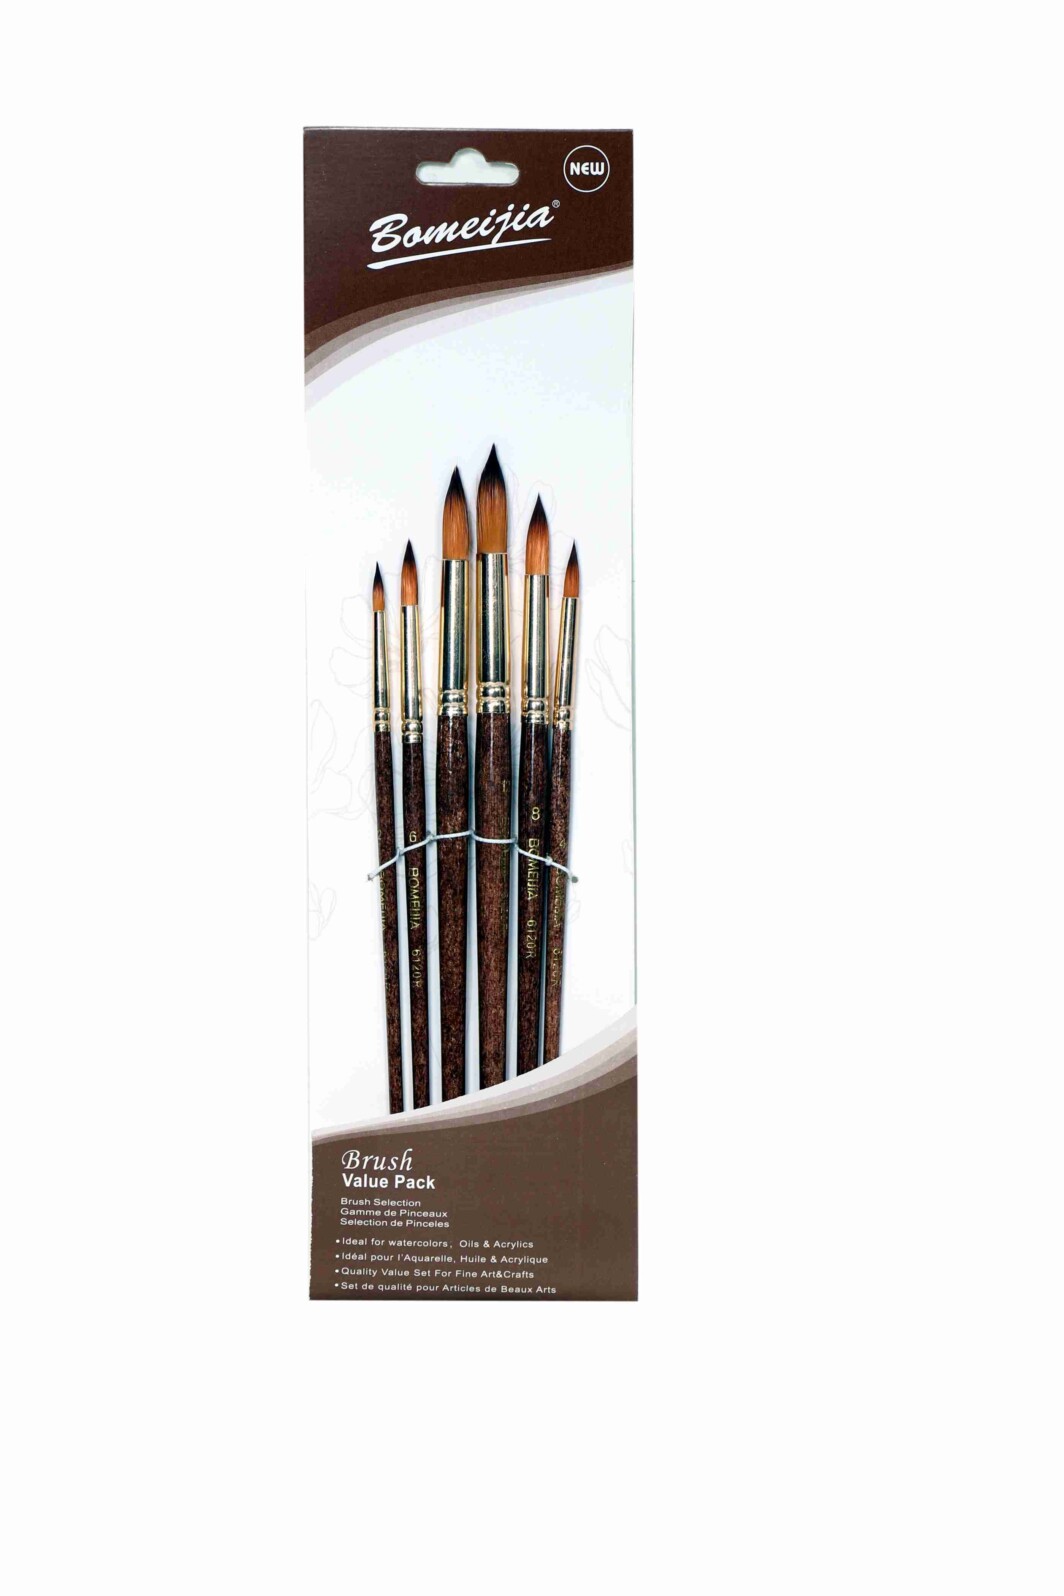 Bomega Round Best Artist Paint Brush Set ( 6 Brushes) for Acrylic, Watercolor & Oil Painting by Bomega Artist Brush -3936